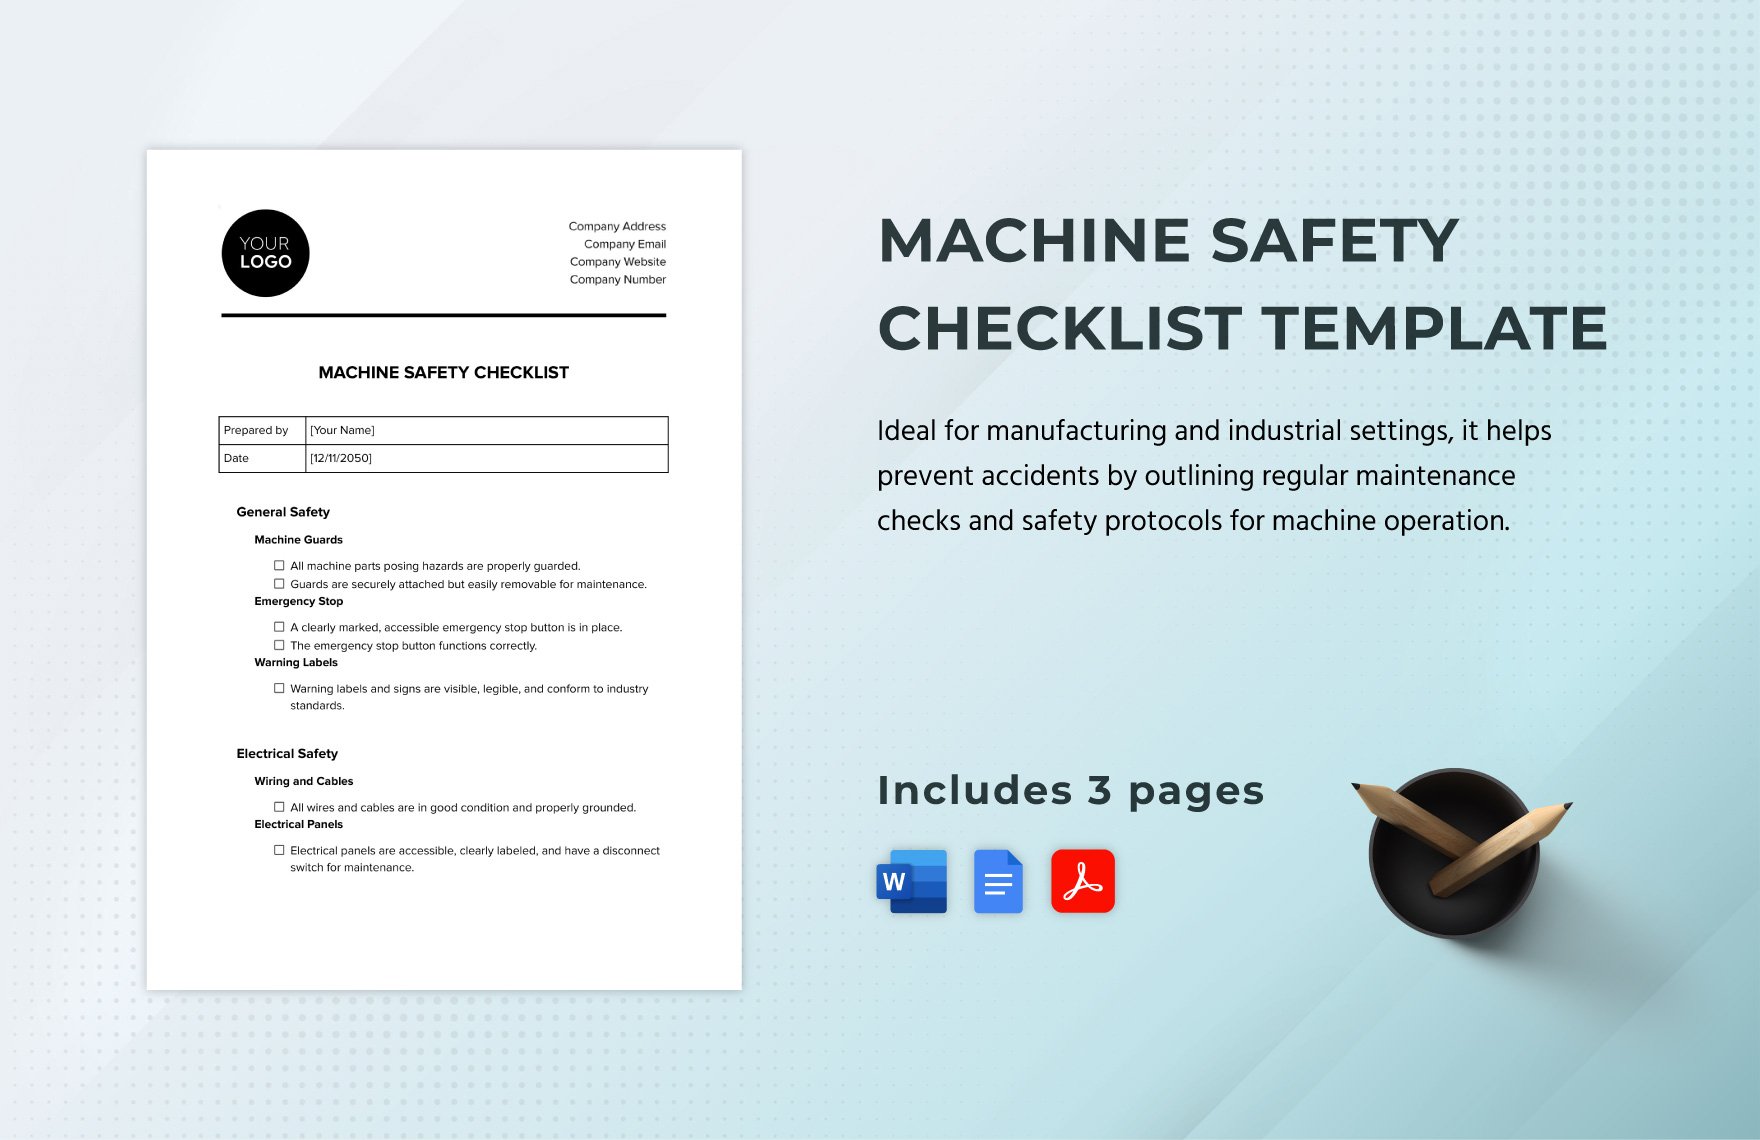 Machine Safety Checklist Template in Word, Google Docs, PDF